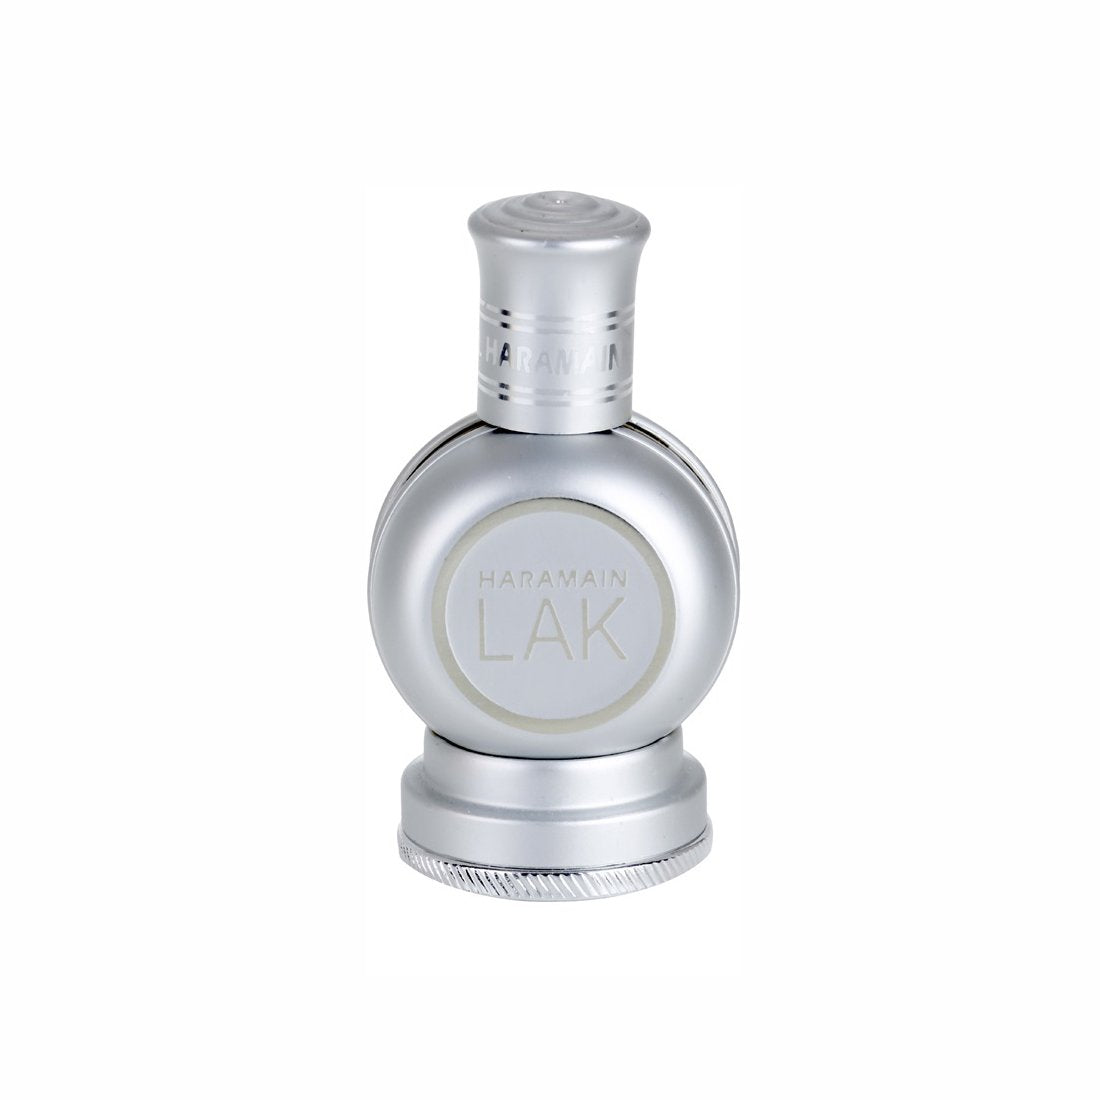 Al Haramain Lak Fragrance Pure Original Perfume Oil (Attar) - 15 ml